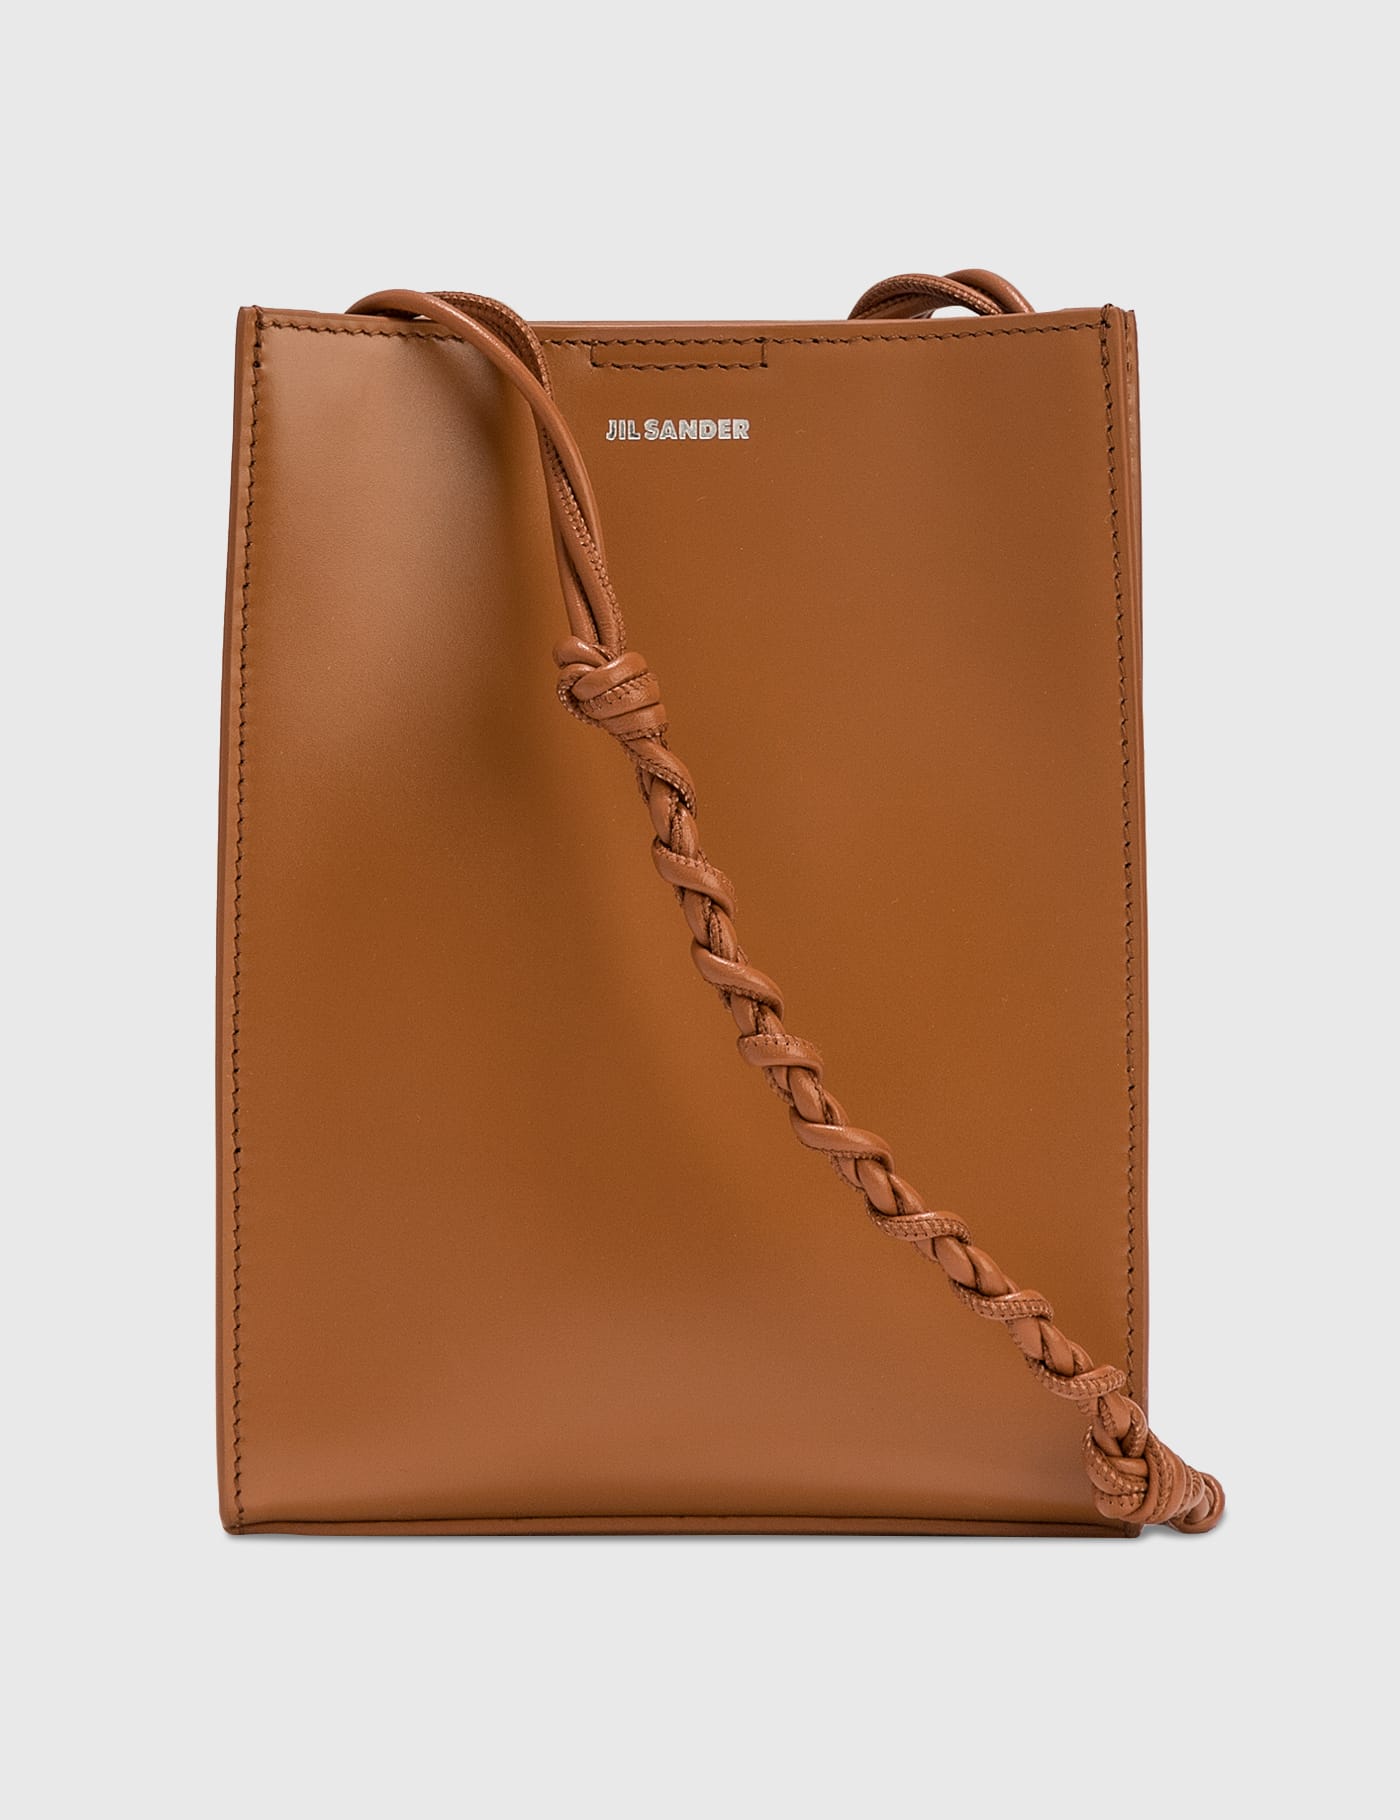 Jil Sander - Tangle Small Bag | HBX - Globally Curated Fashion and